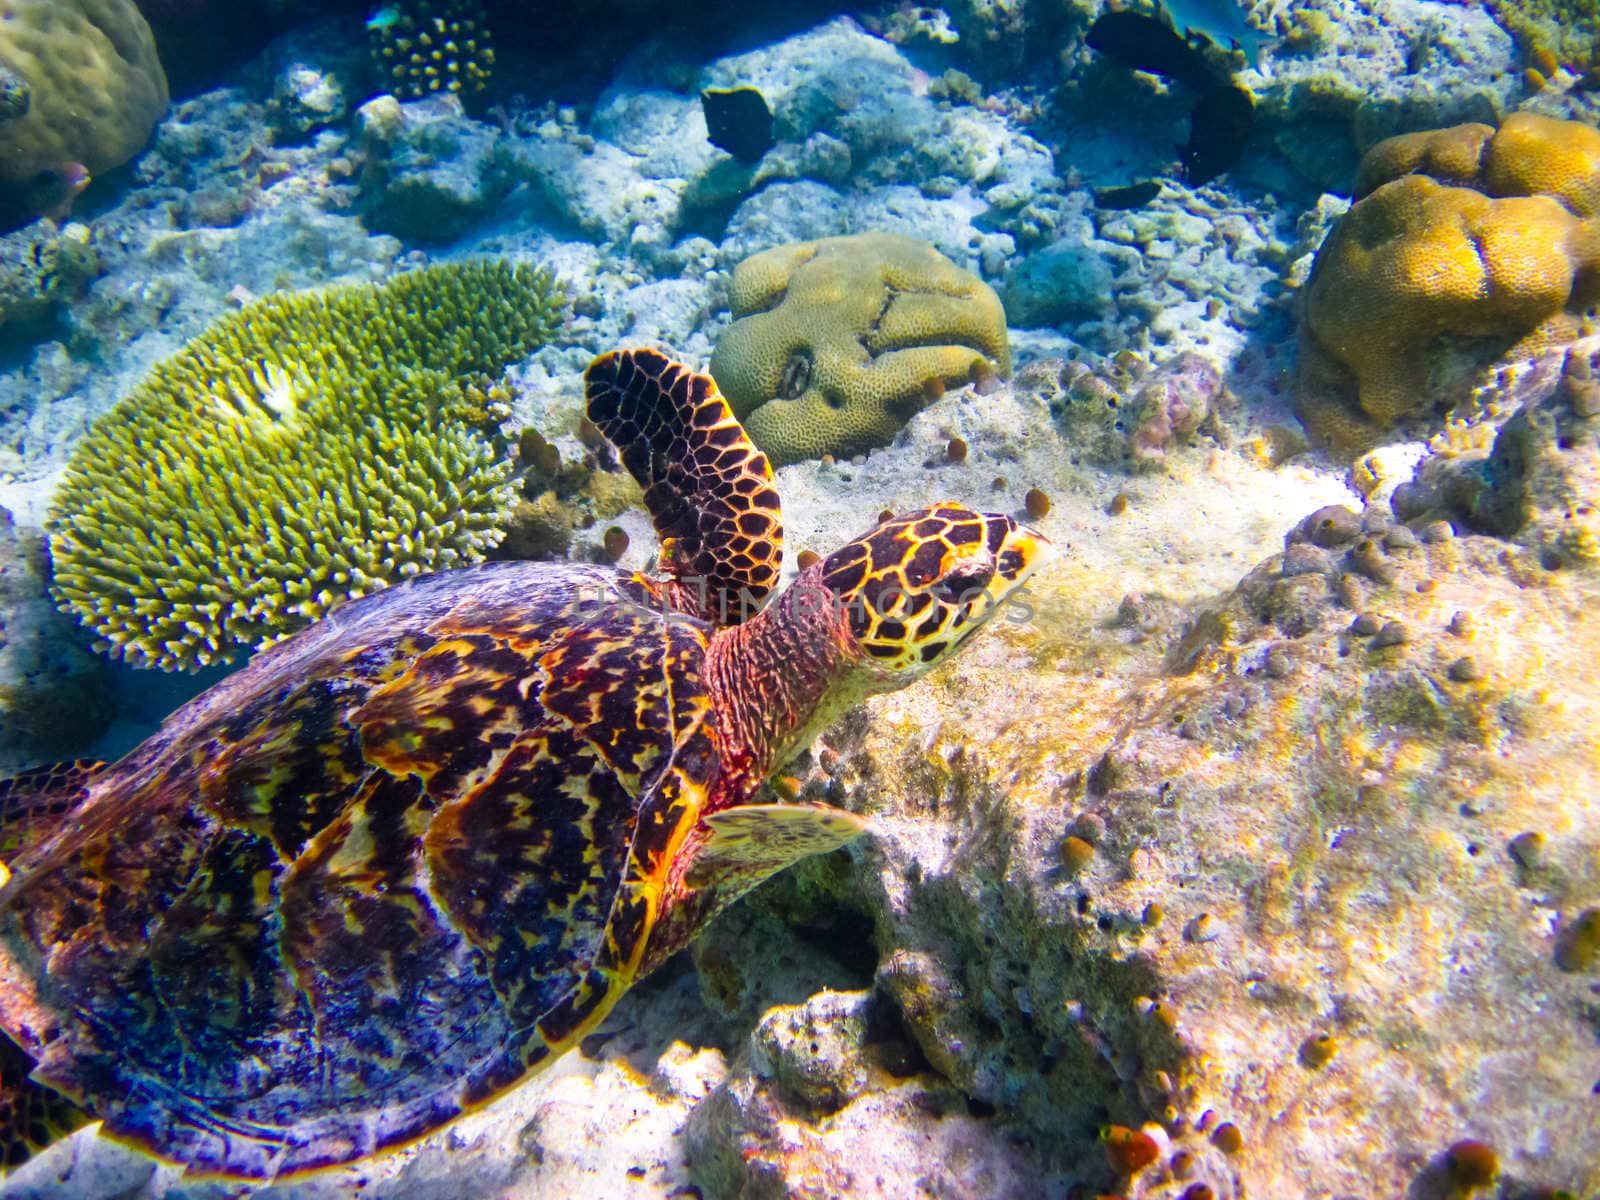 Hawksbill Turtle swiming like flying at Maldives